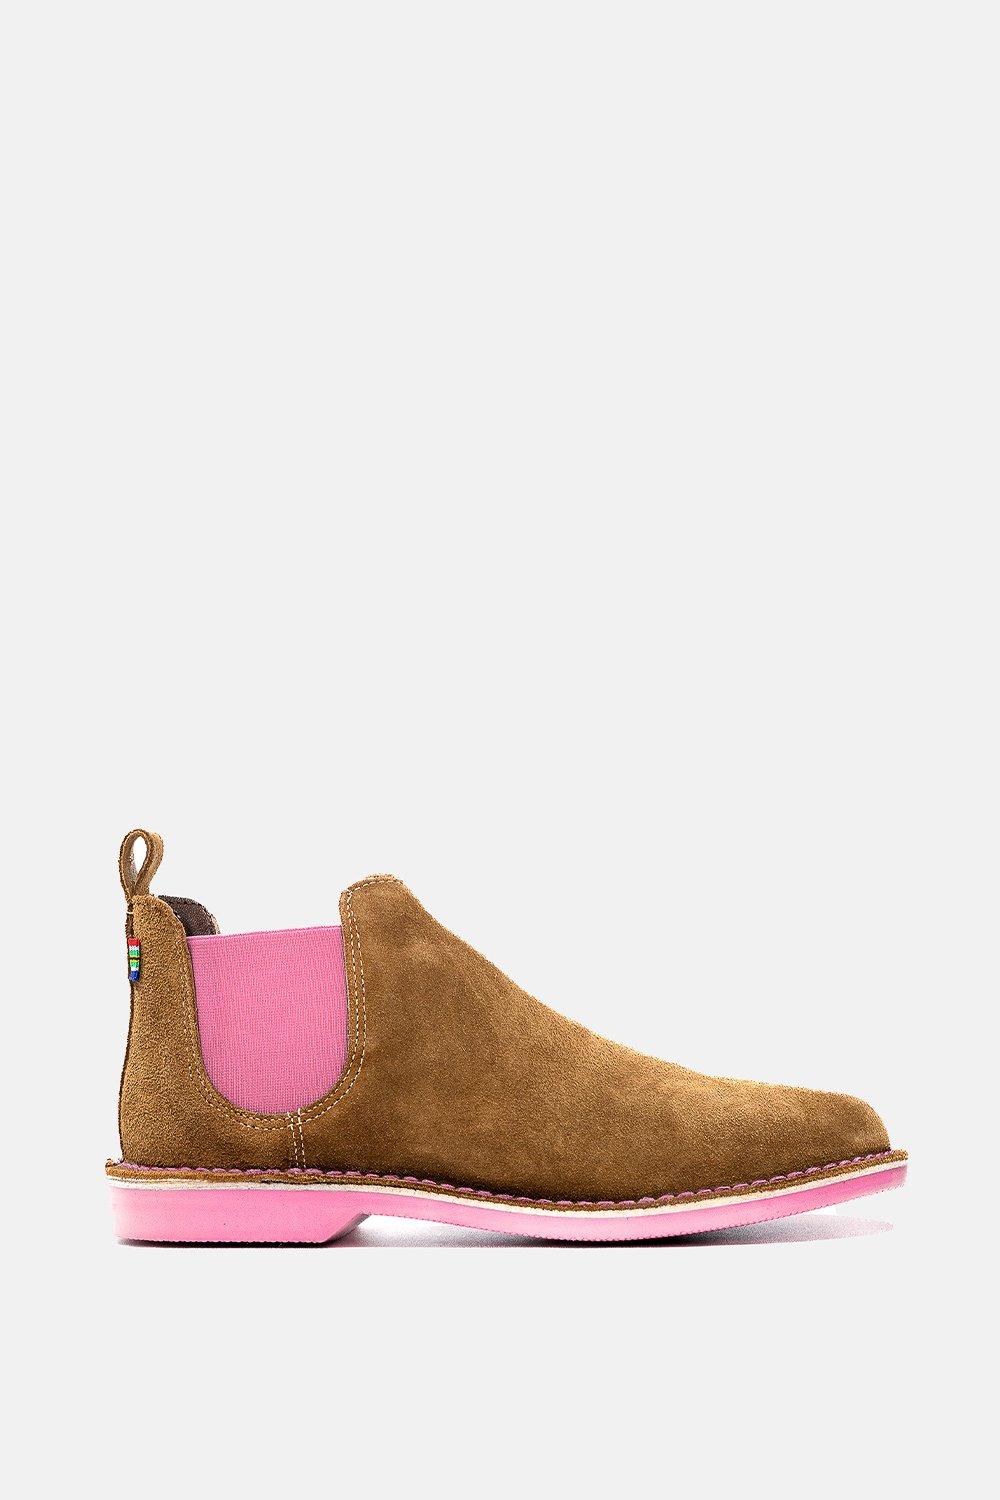 Замшевые ботинки челси Veldskoen Shoes, розовый зебра сафари ооо 111489 делюкс safari